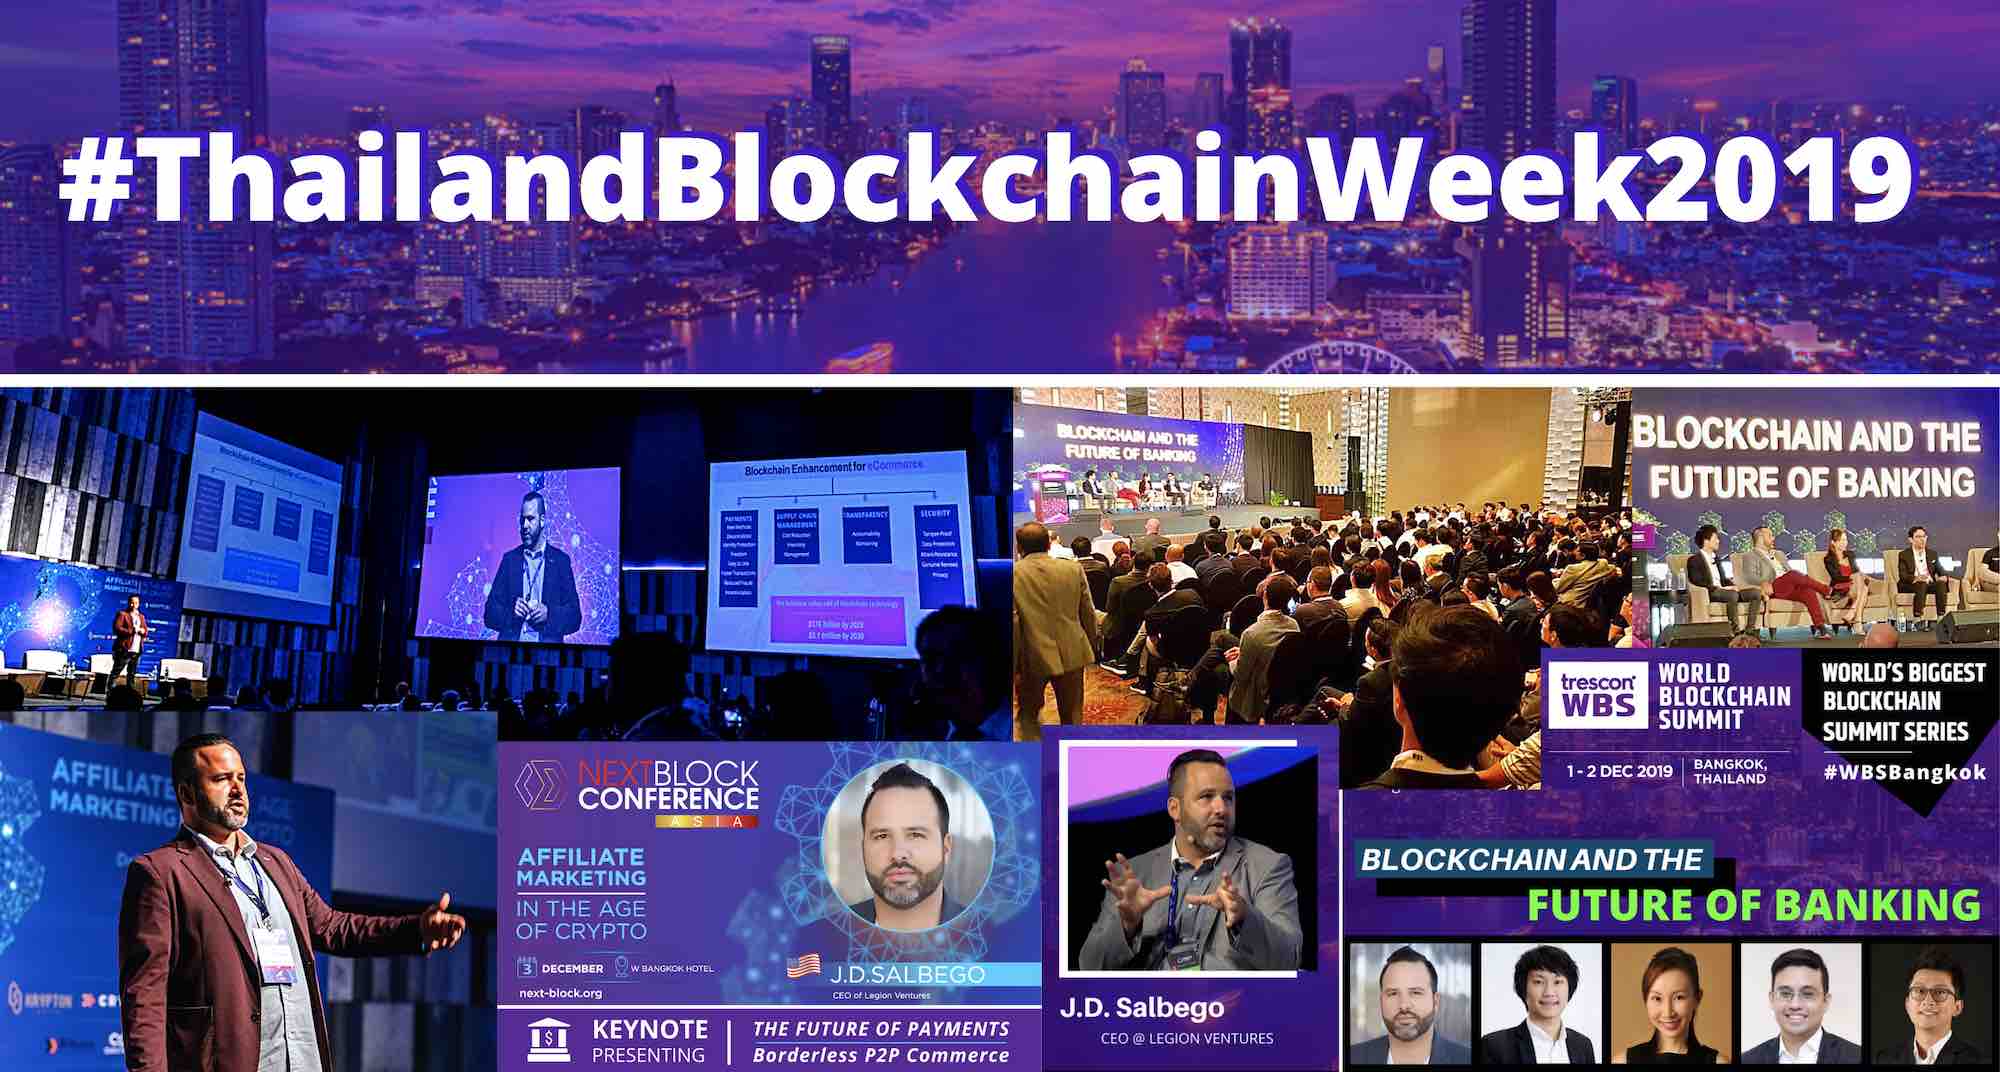 Thailand Blockchain Week 2019 — The Emergence of the Next Blockchain Hub